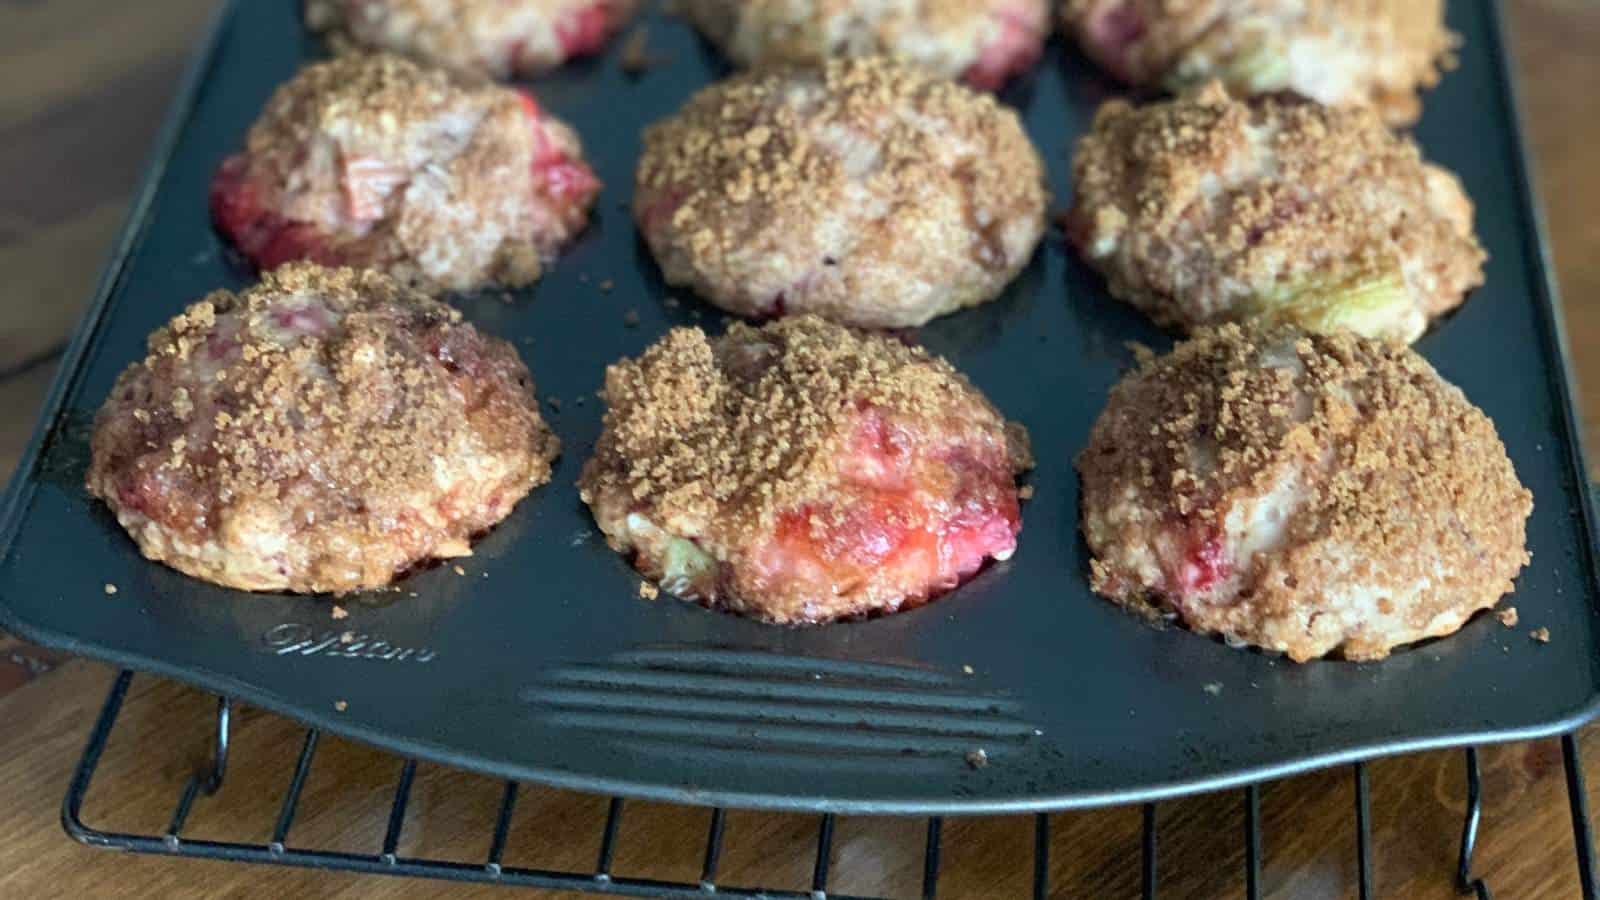 Muffin Pan of Strawberry Rhubarb Muffins.